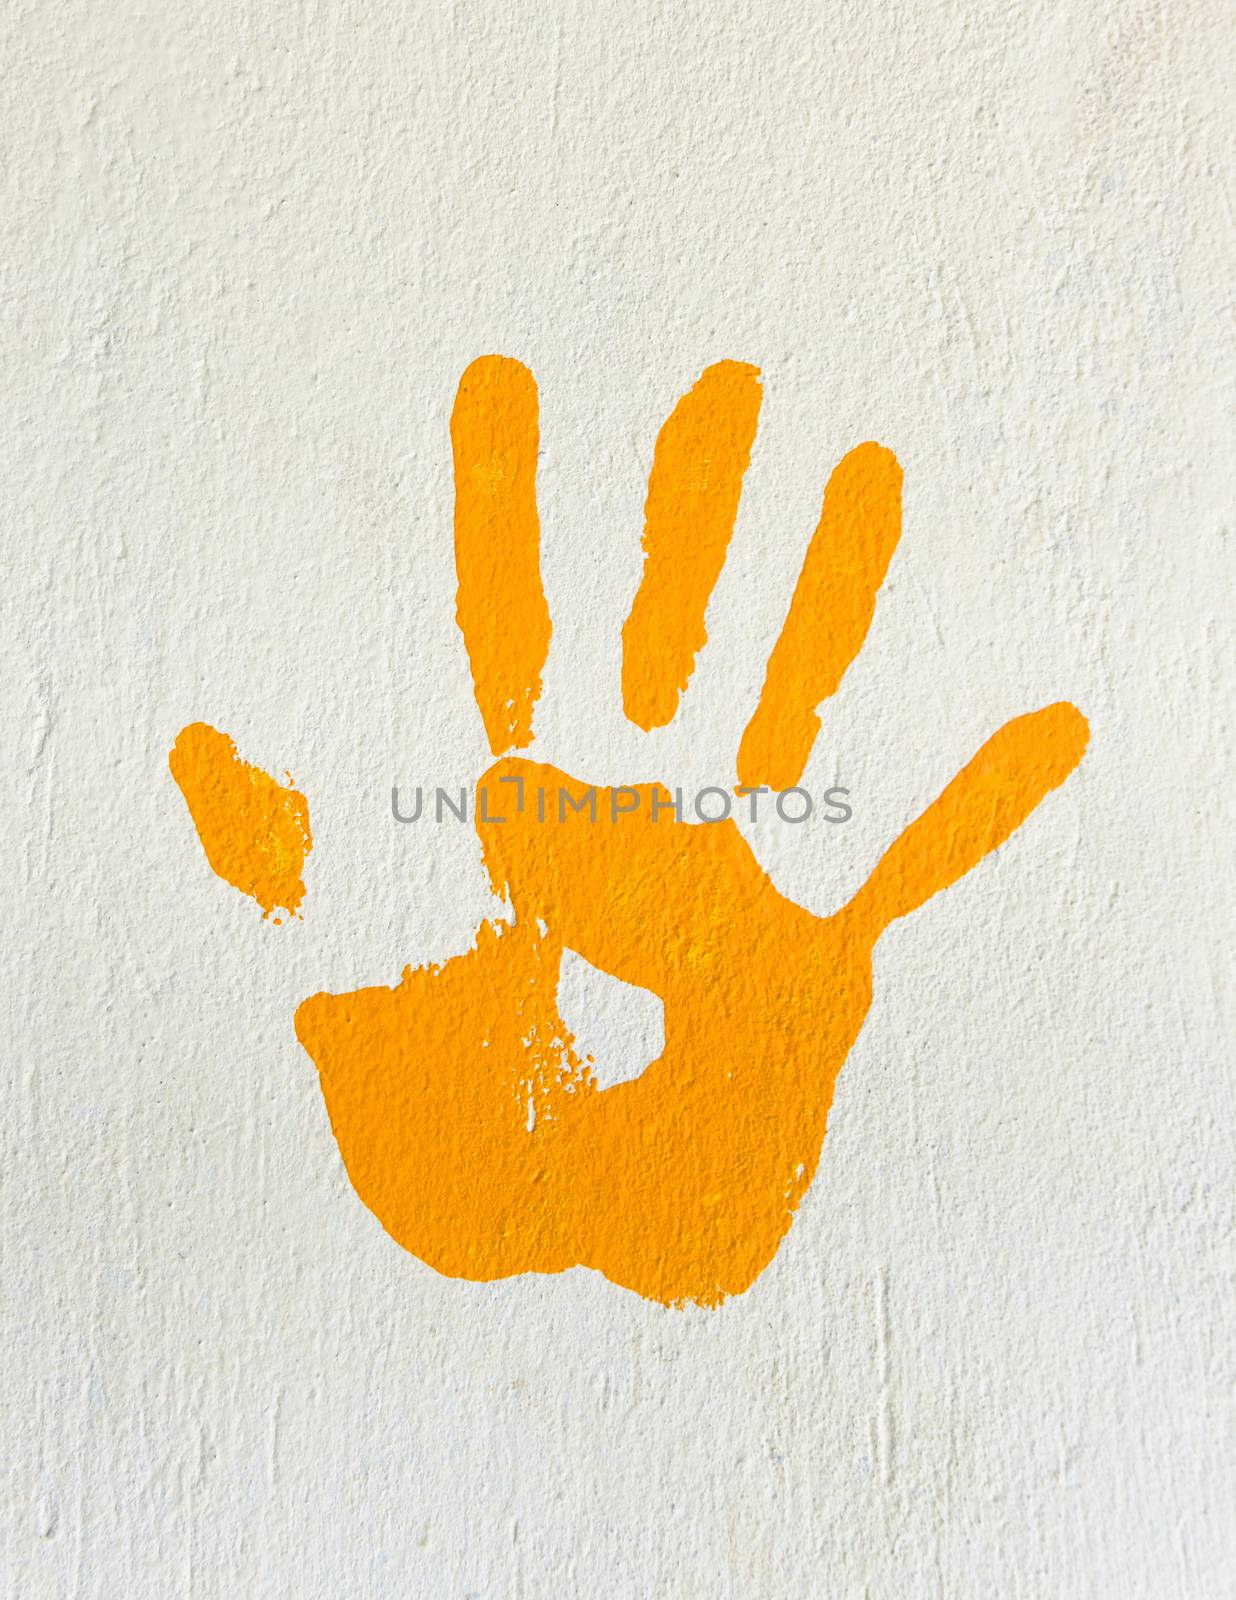 Orange handprint on a wall by dutourdumonde